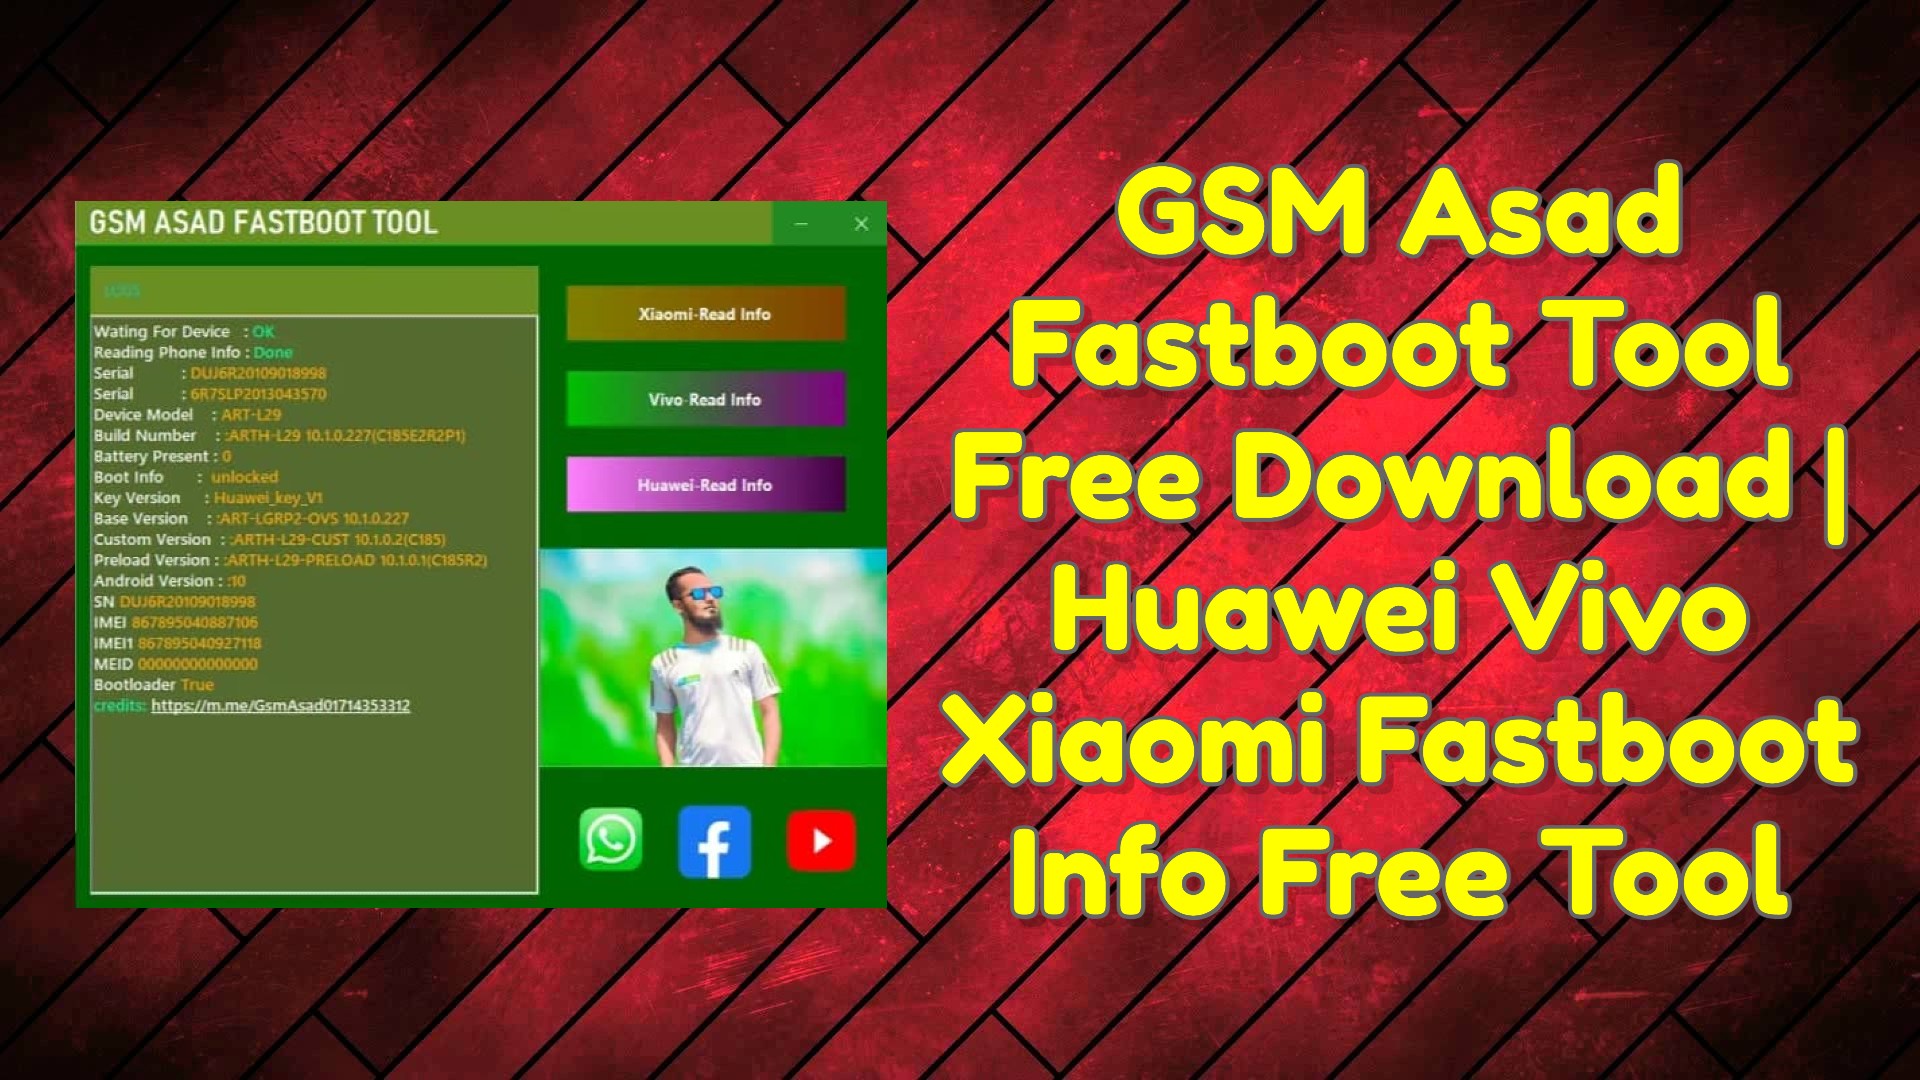 GSM Asad Huawei Vivo Xiaomi Fastboot Info Tool